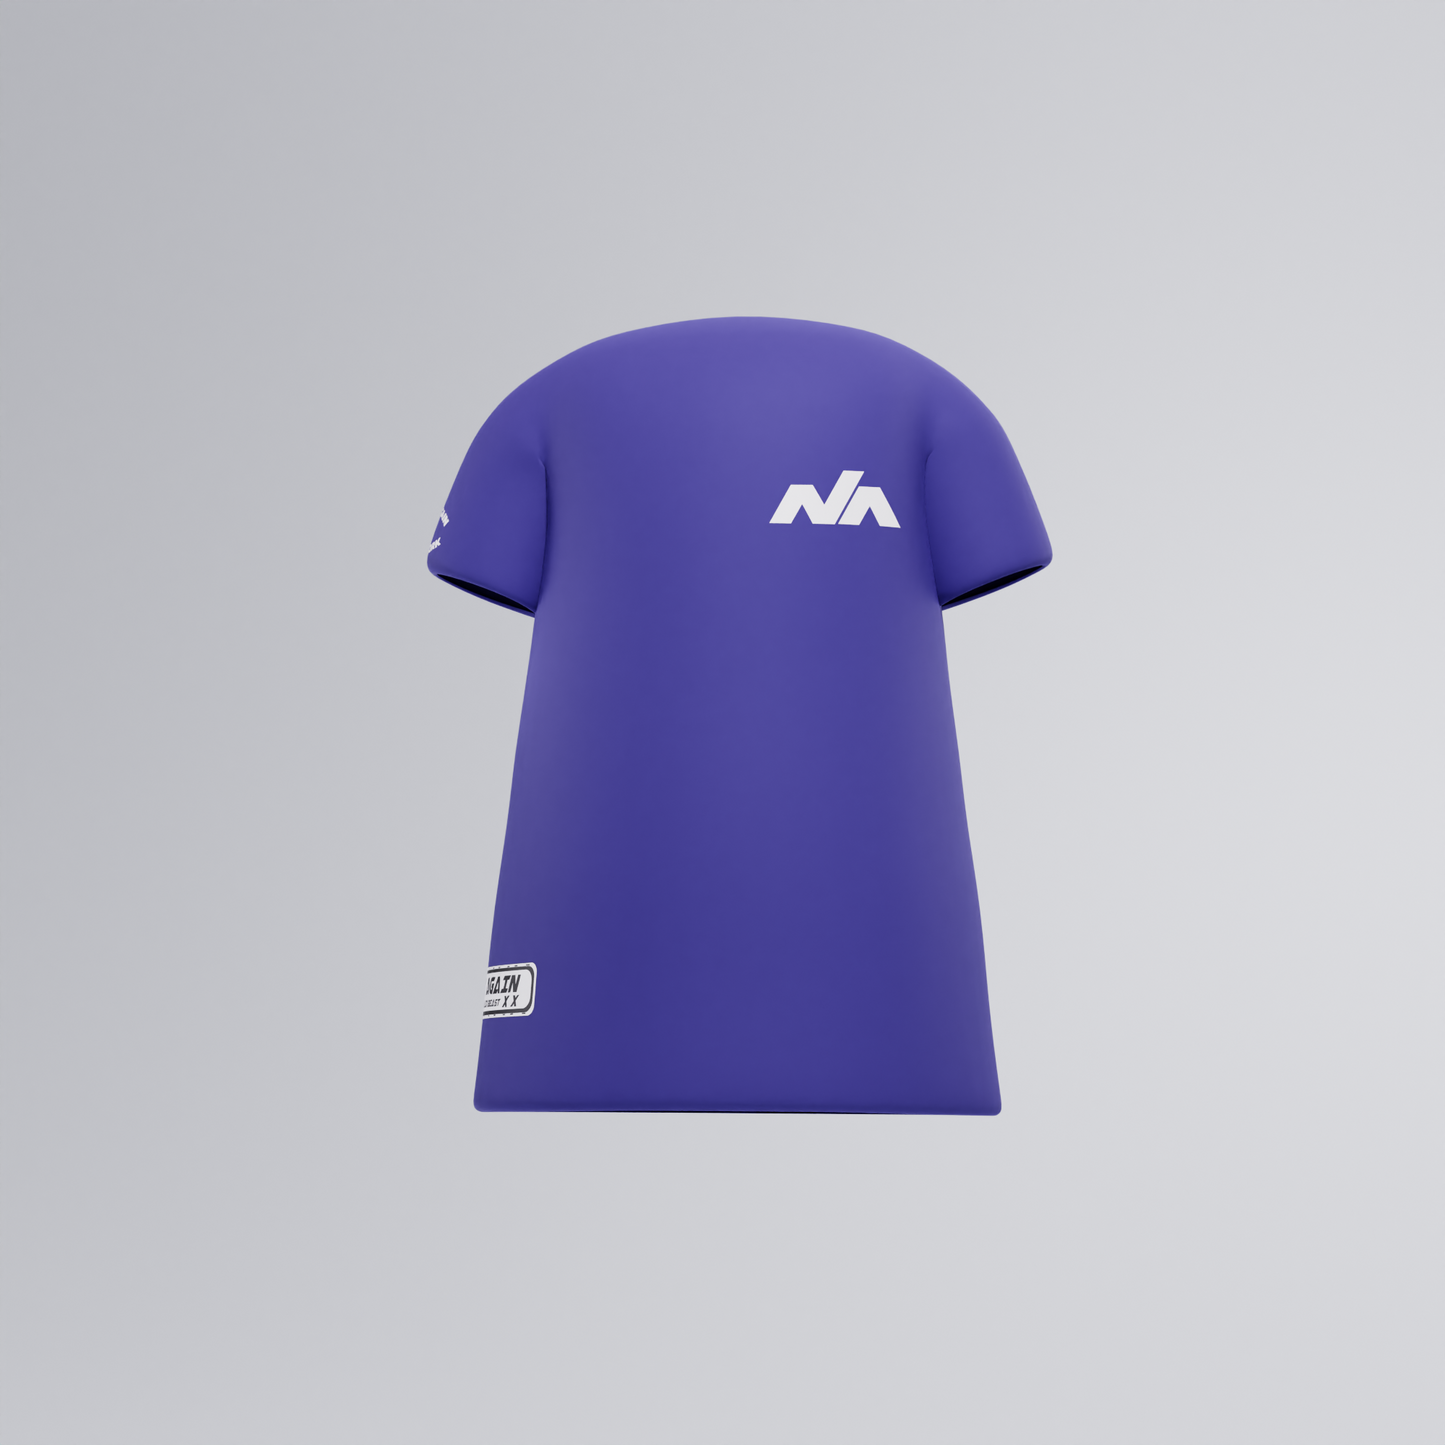 XX "N-A" T-Shirt (Digital Download)